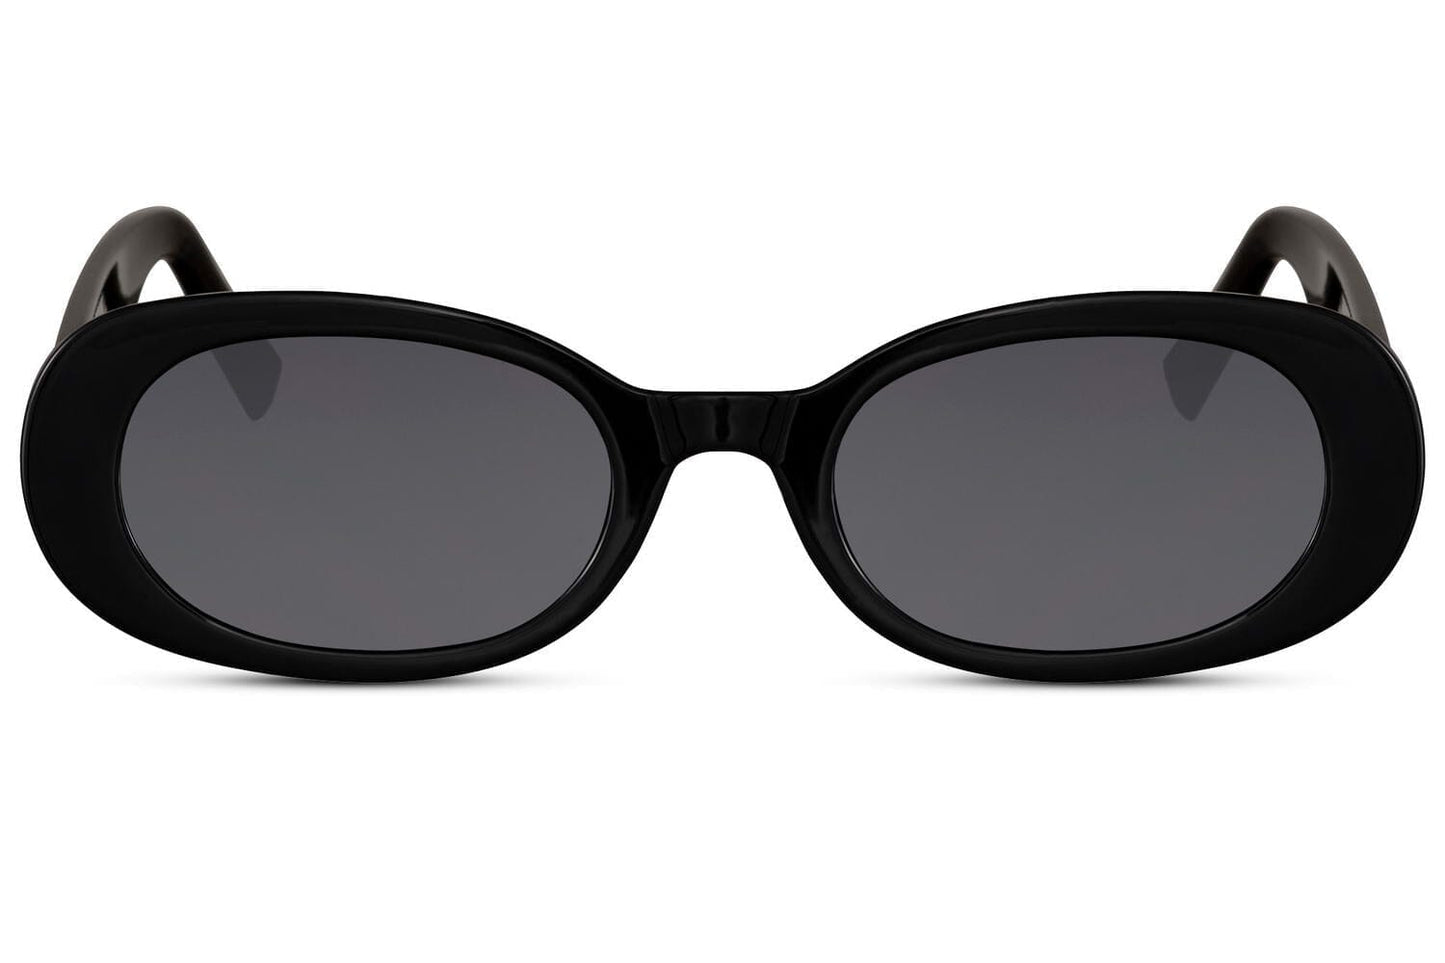 Black oval sunglasses. UV400 protected.